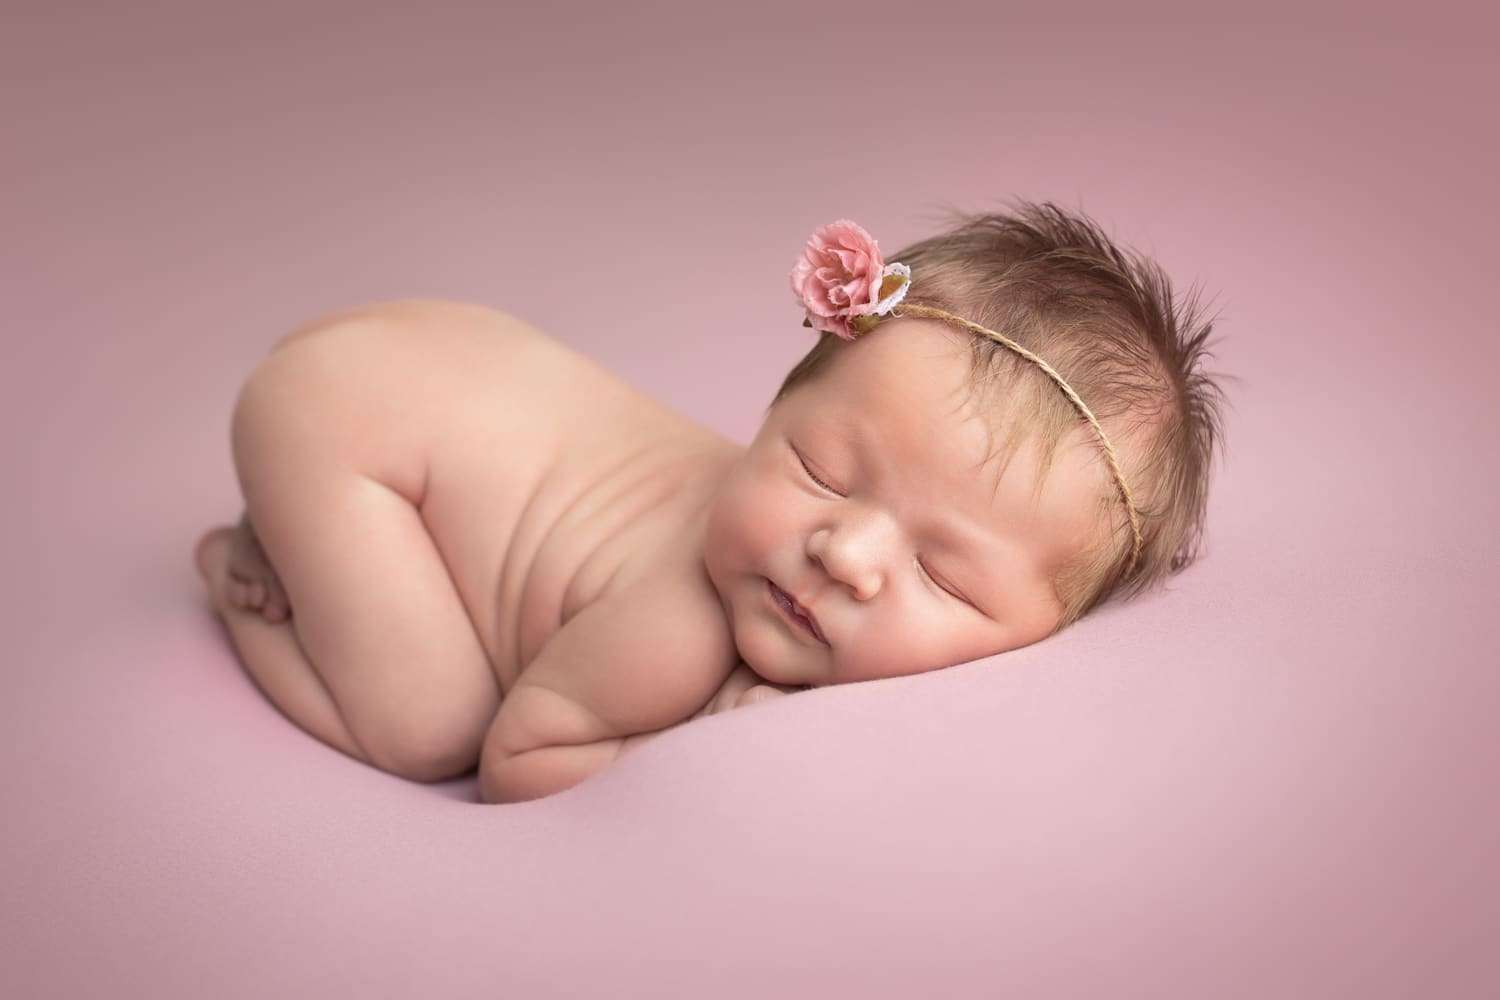 newborn photographer in rochester ny captures newborn baby girl sleeping in bum up pose